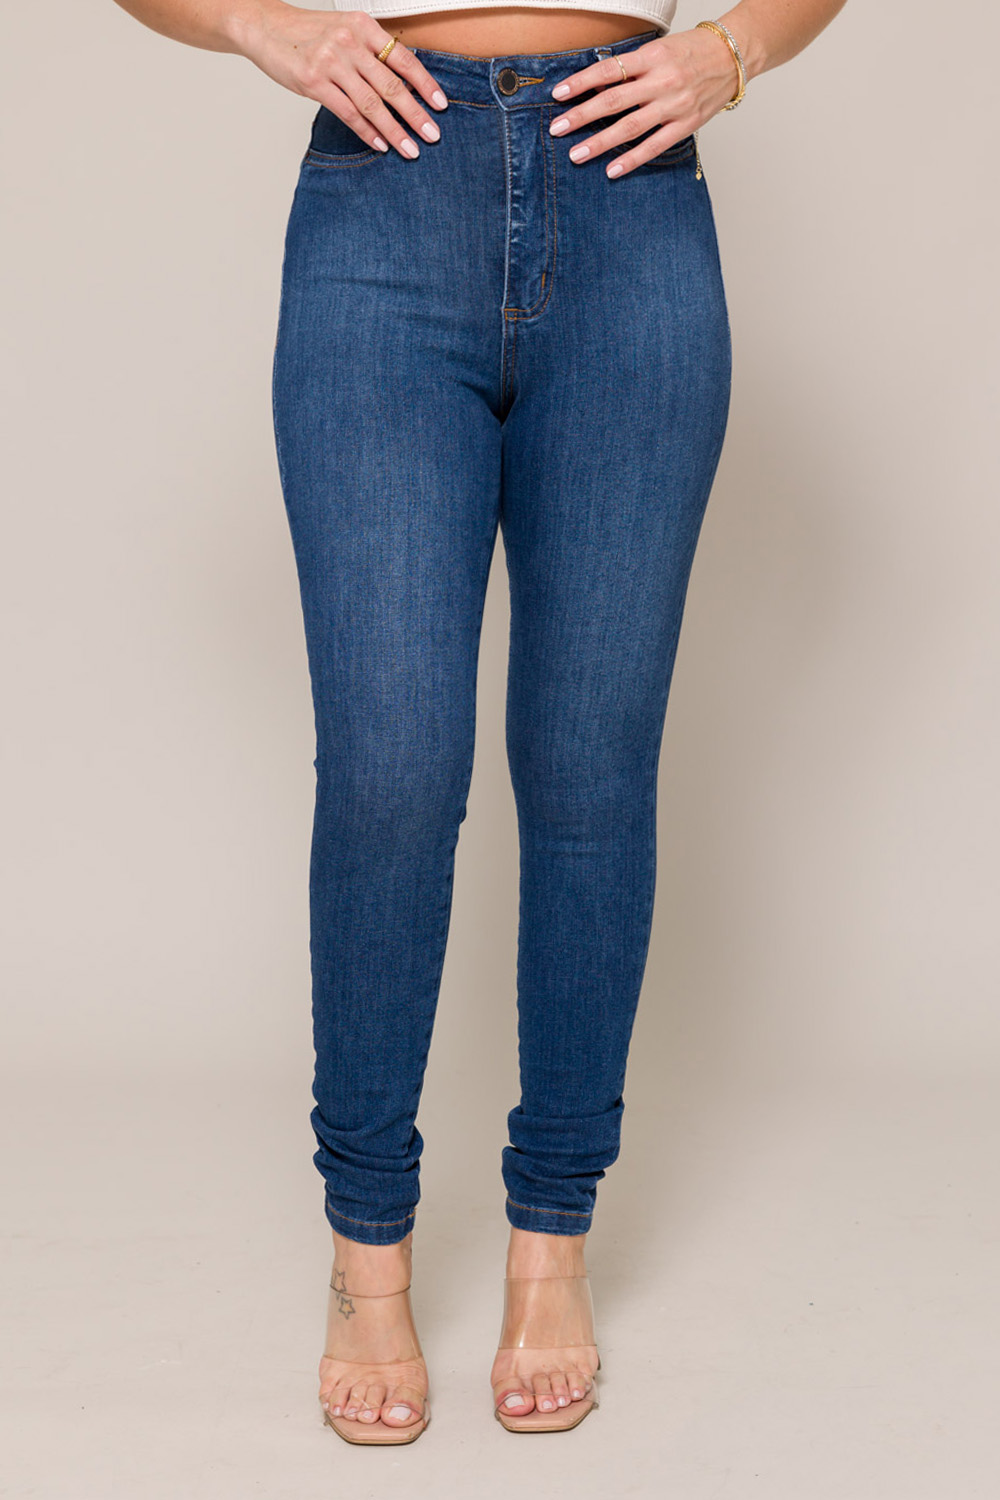 Calça jeans Skinny Basic 11700 - Jeans Escuro